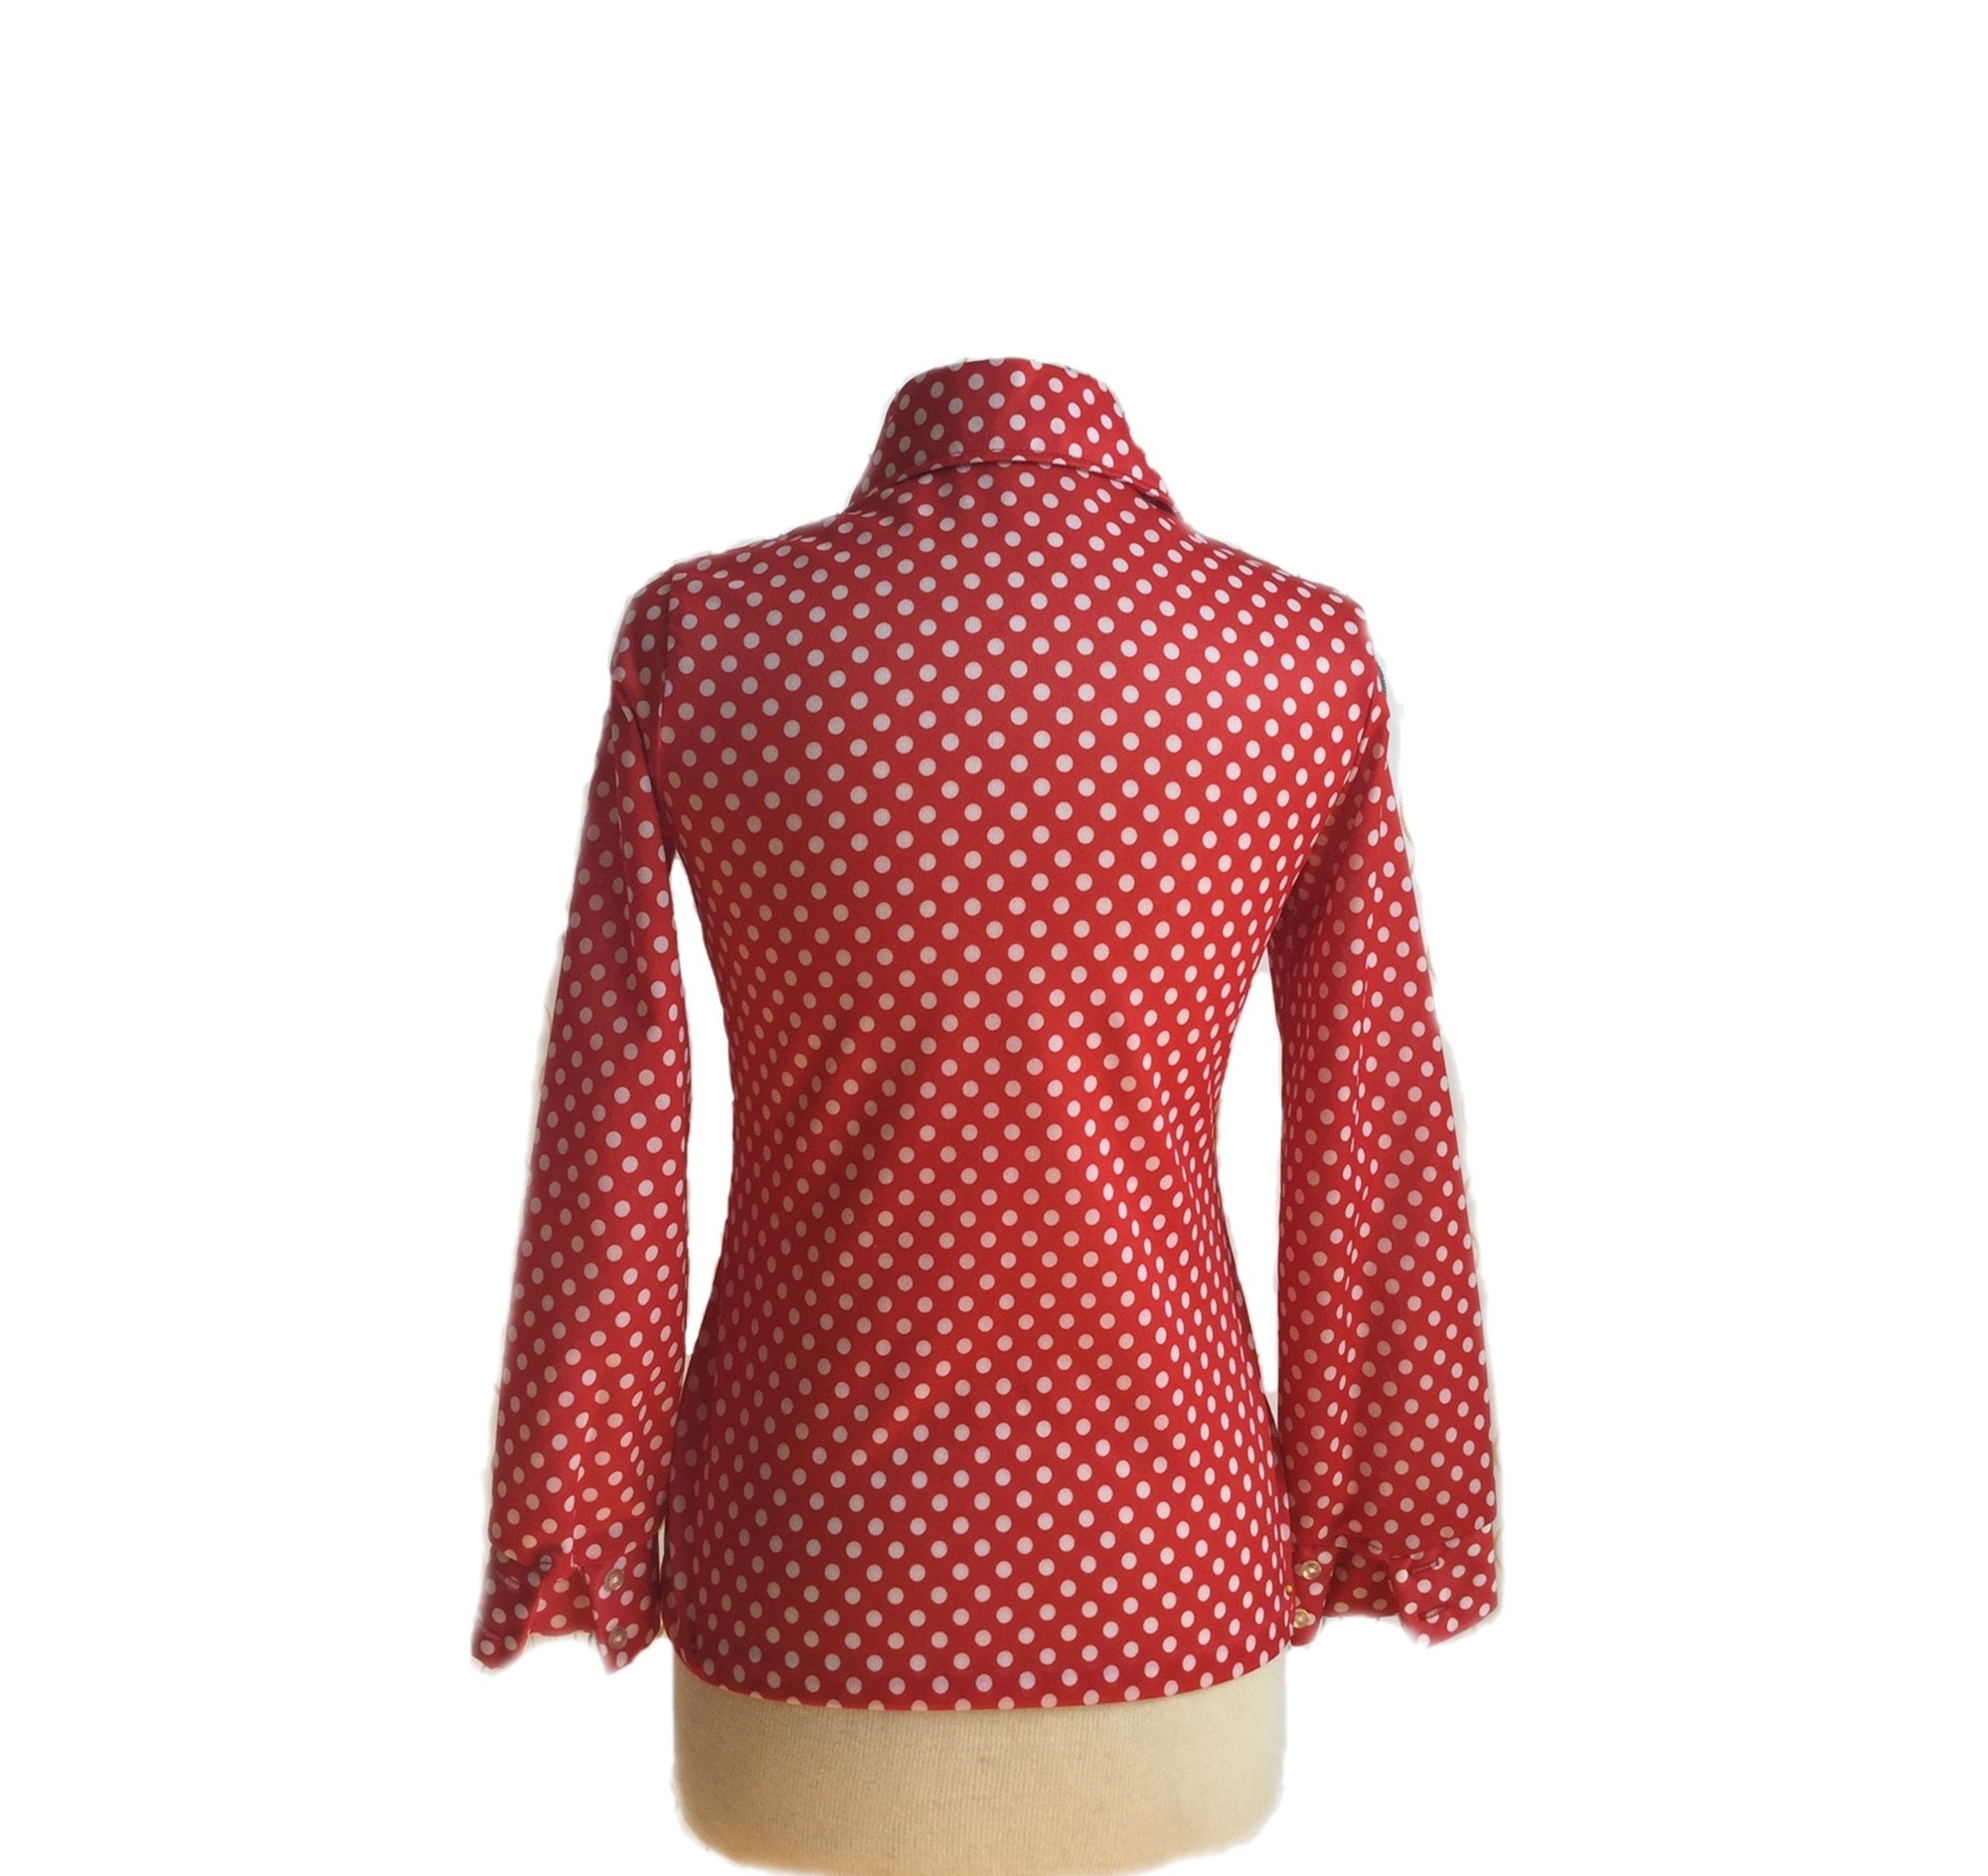 Vintage 70s red & white polka dot shirt/ Jack Winter blouse/ | Etsy